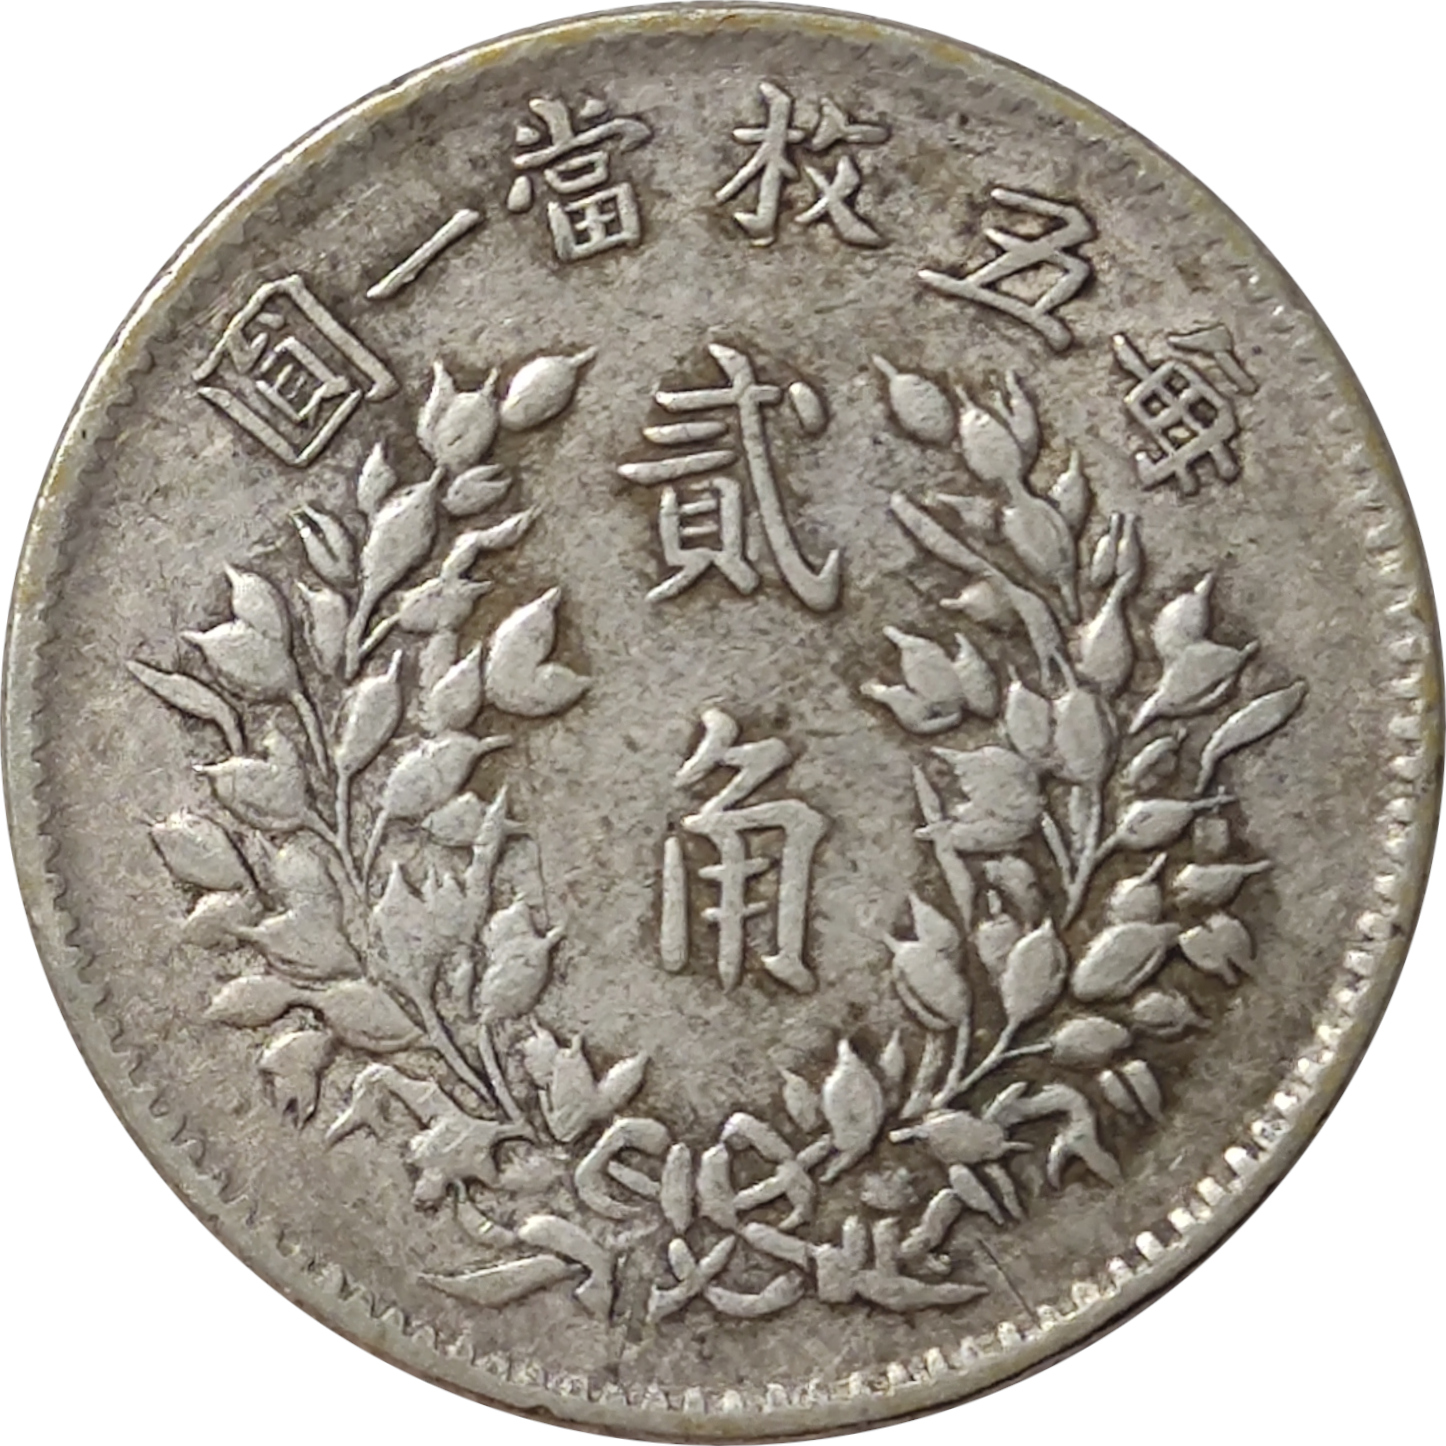 20 cents - Yuan Shikai